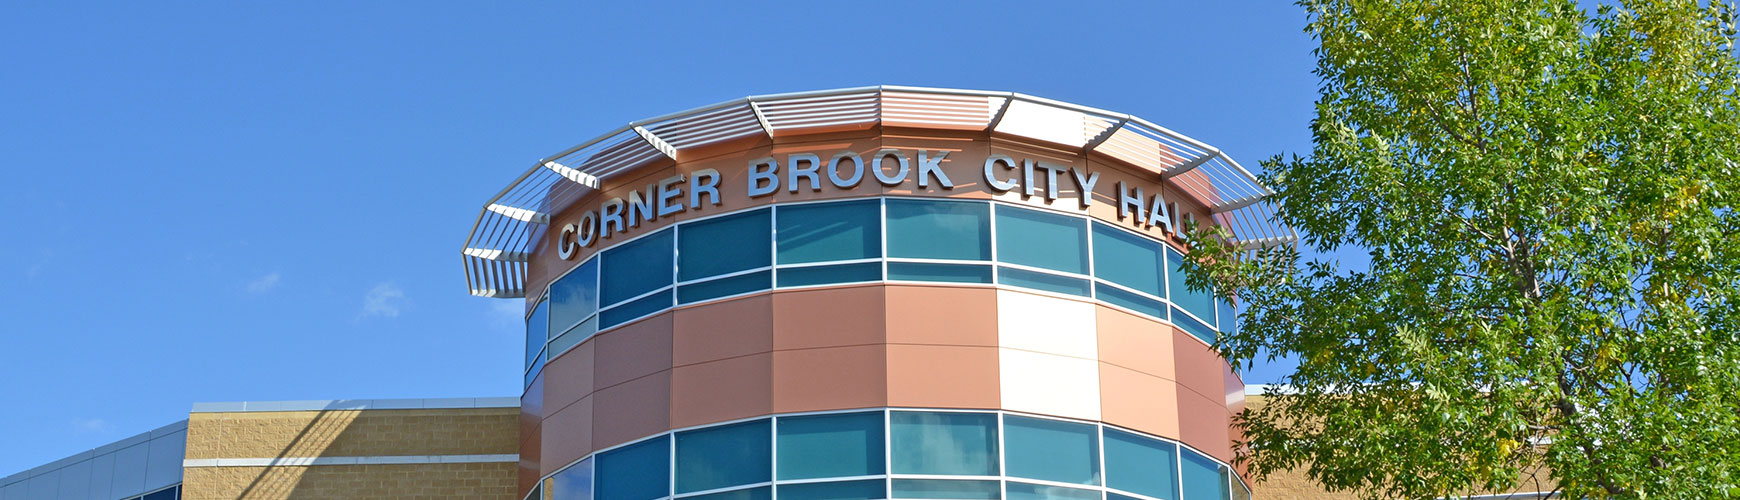 Corner Brook city hall building